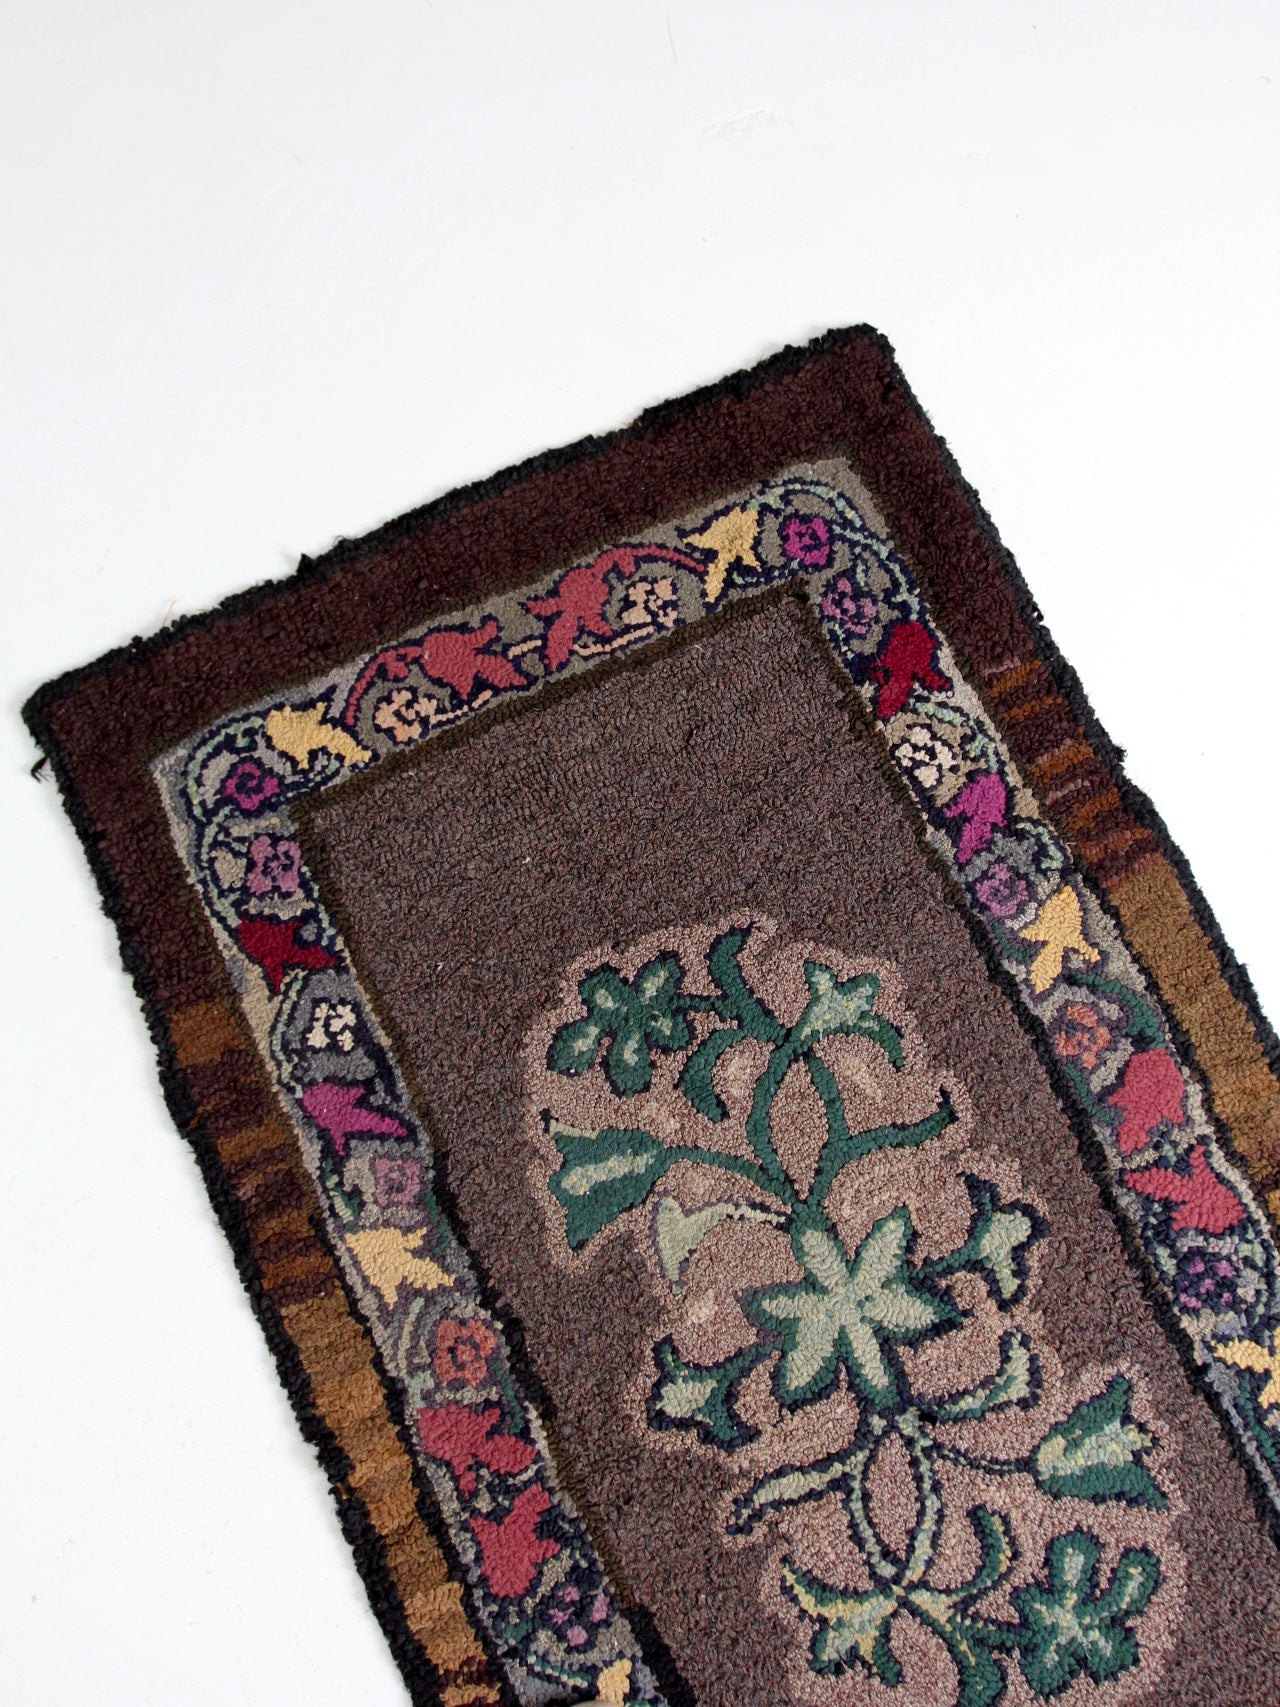 antique hooked rug